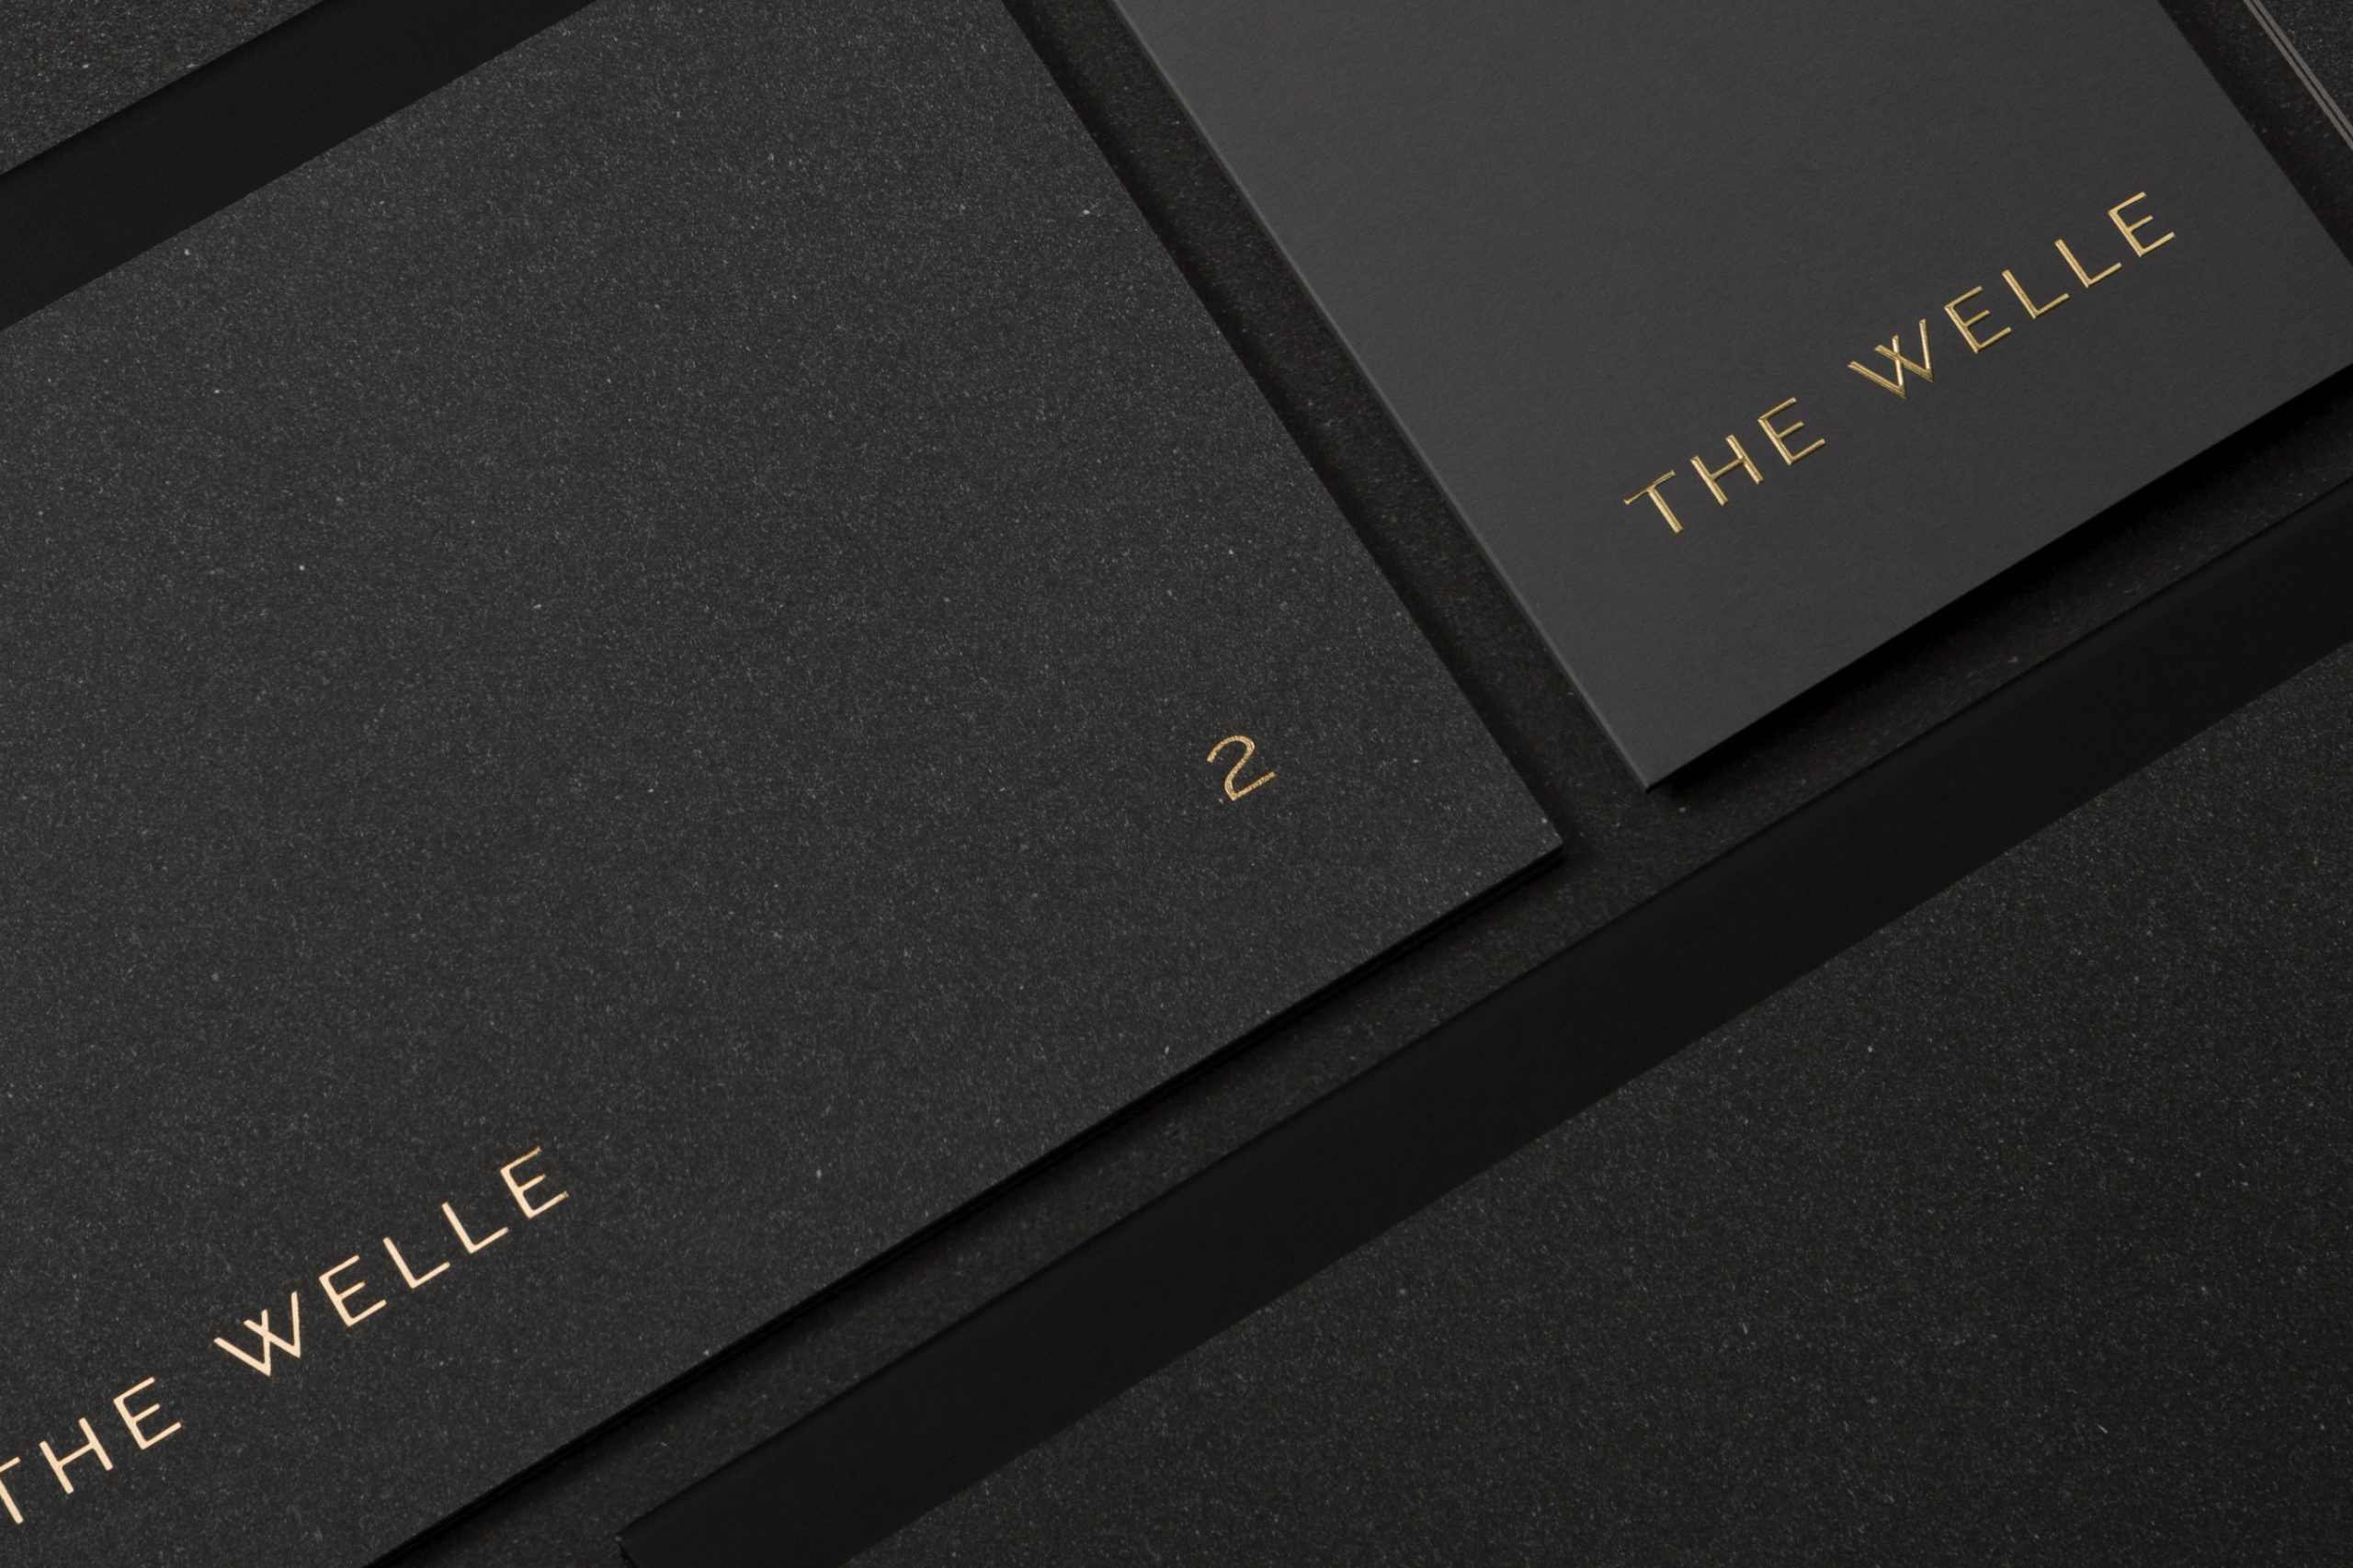 The Welle地产项目画册设计